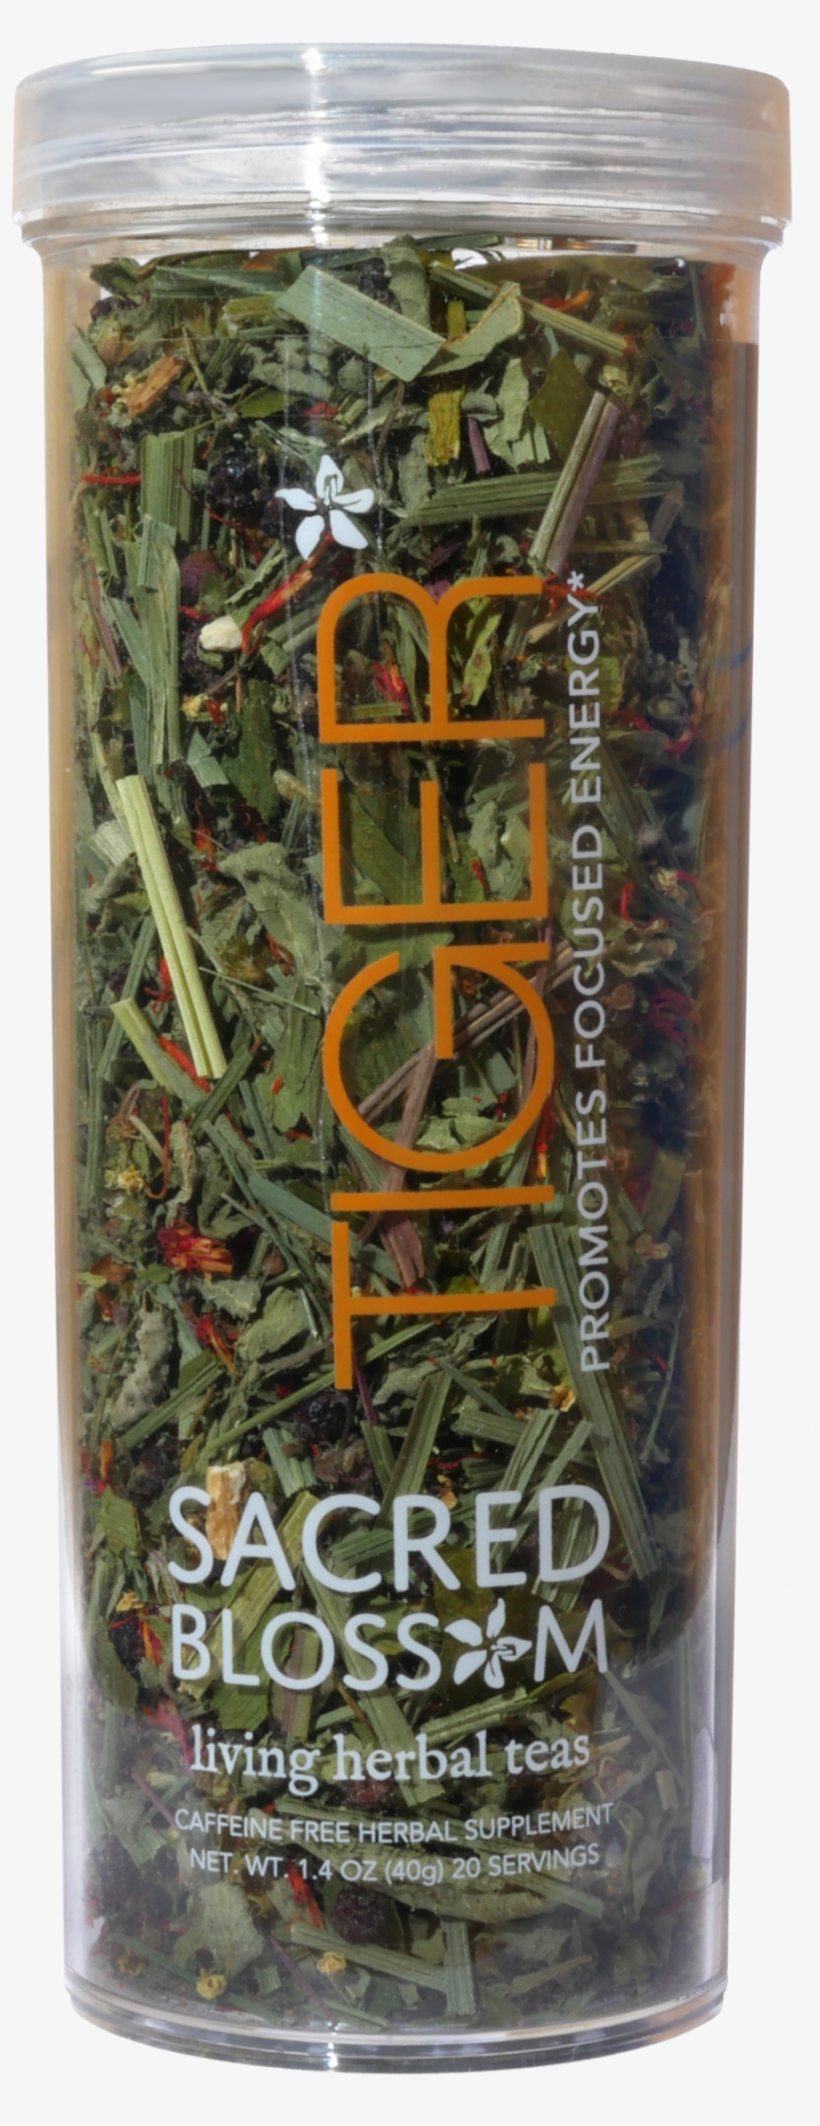 Living Herbal Teas - Golden Monkey Tea, transparent png #965558